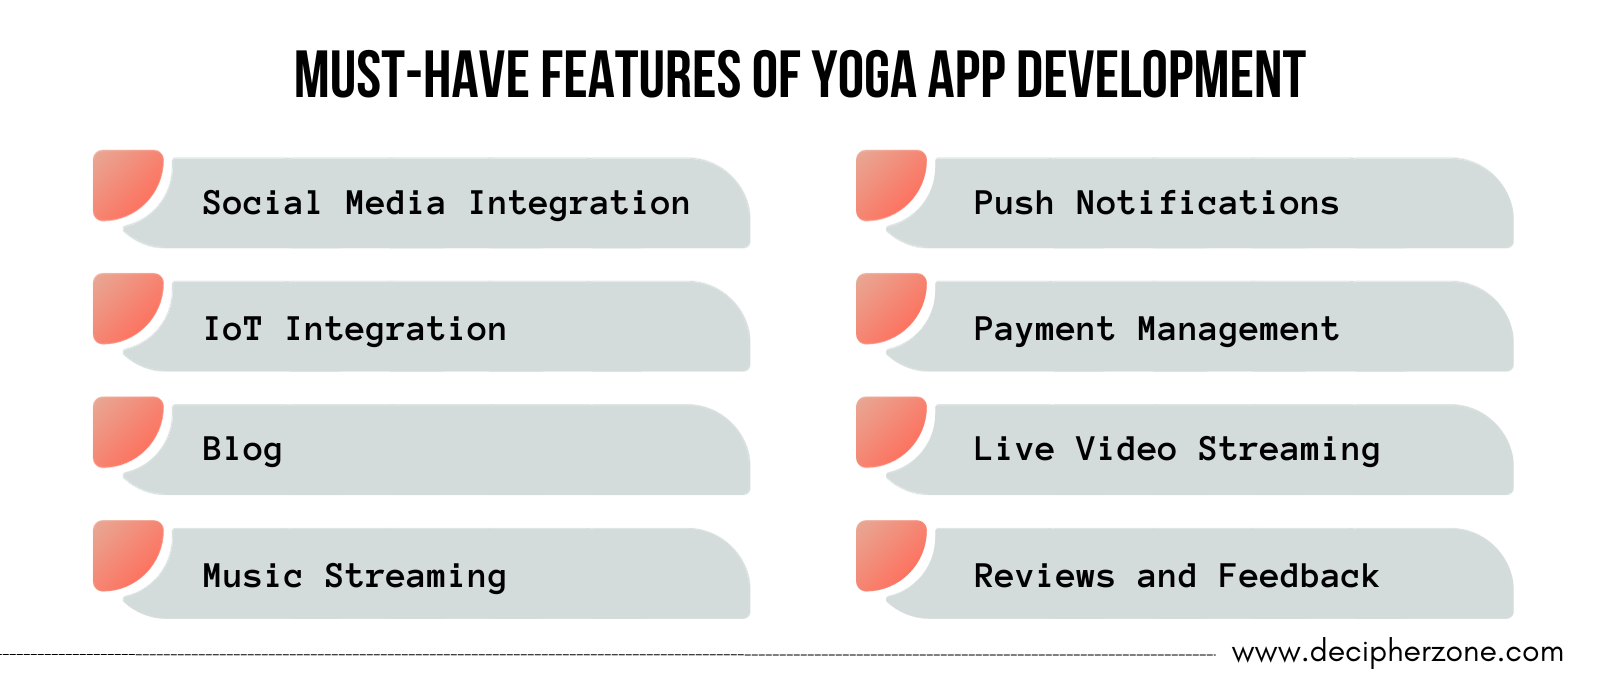 Yoga App Development Features